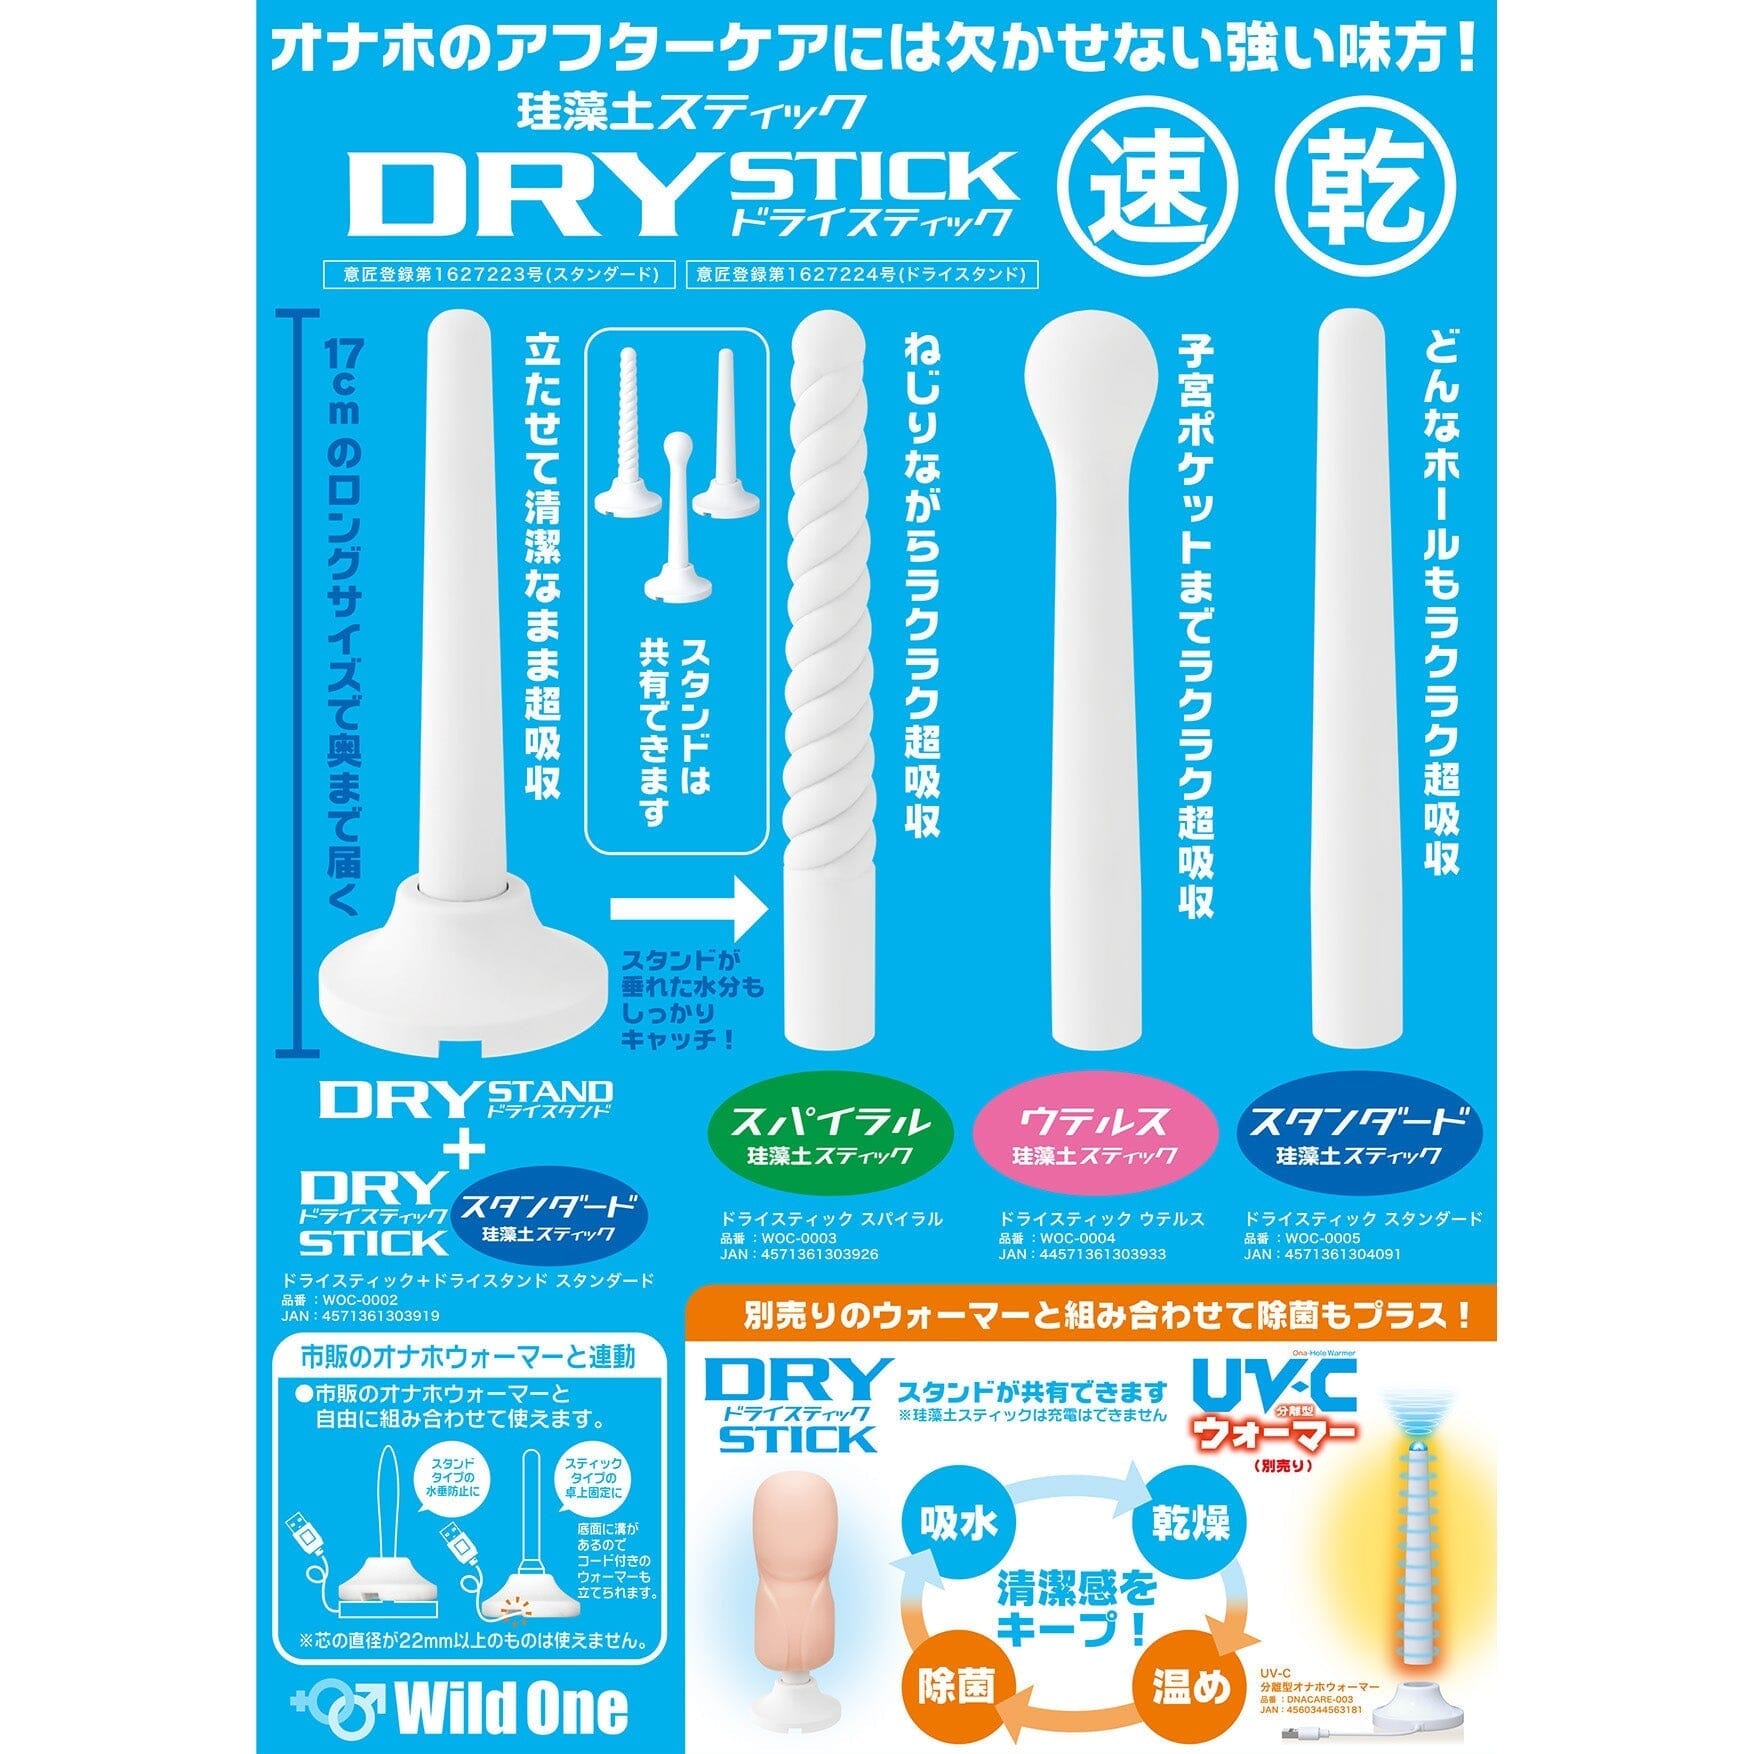 DNA JAPAN Dry Stick 速乾珪藻土吸濕棒 情趣用品清潔及配件 購買